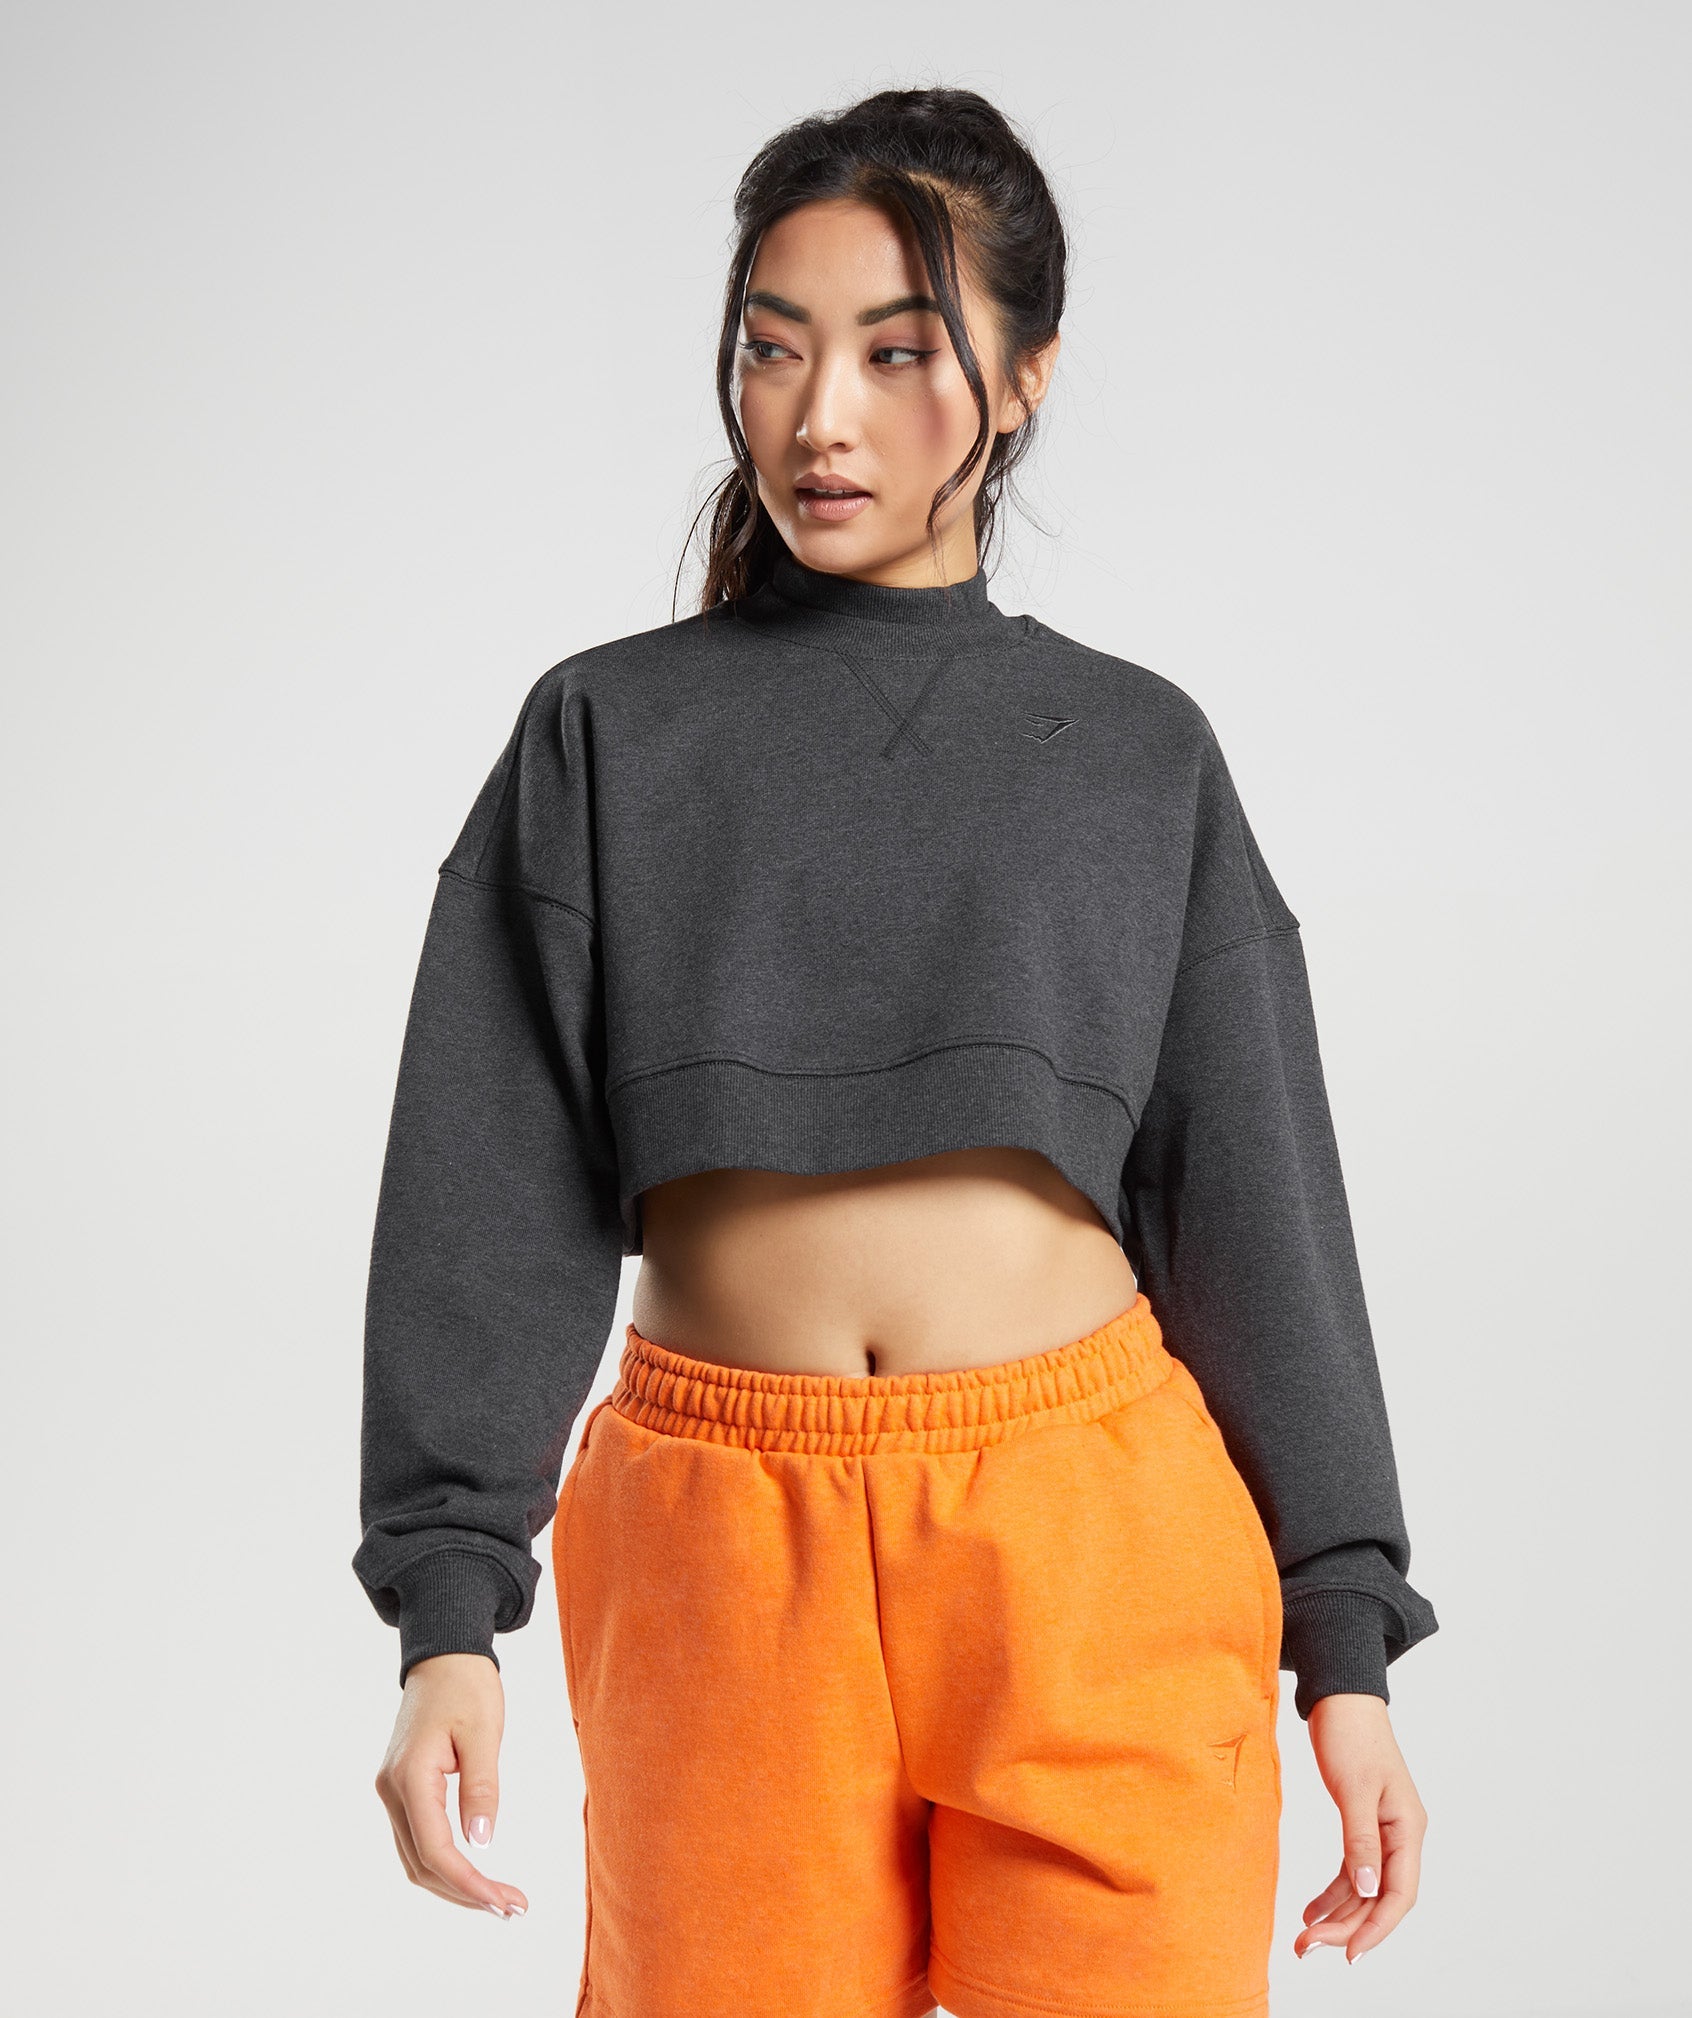 Women's Cropped Sweatshirts - Gymshark